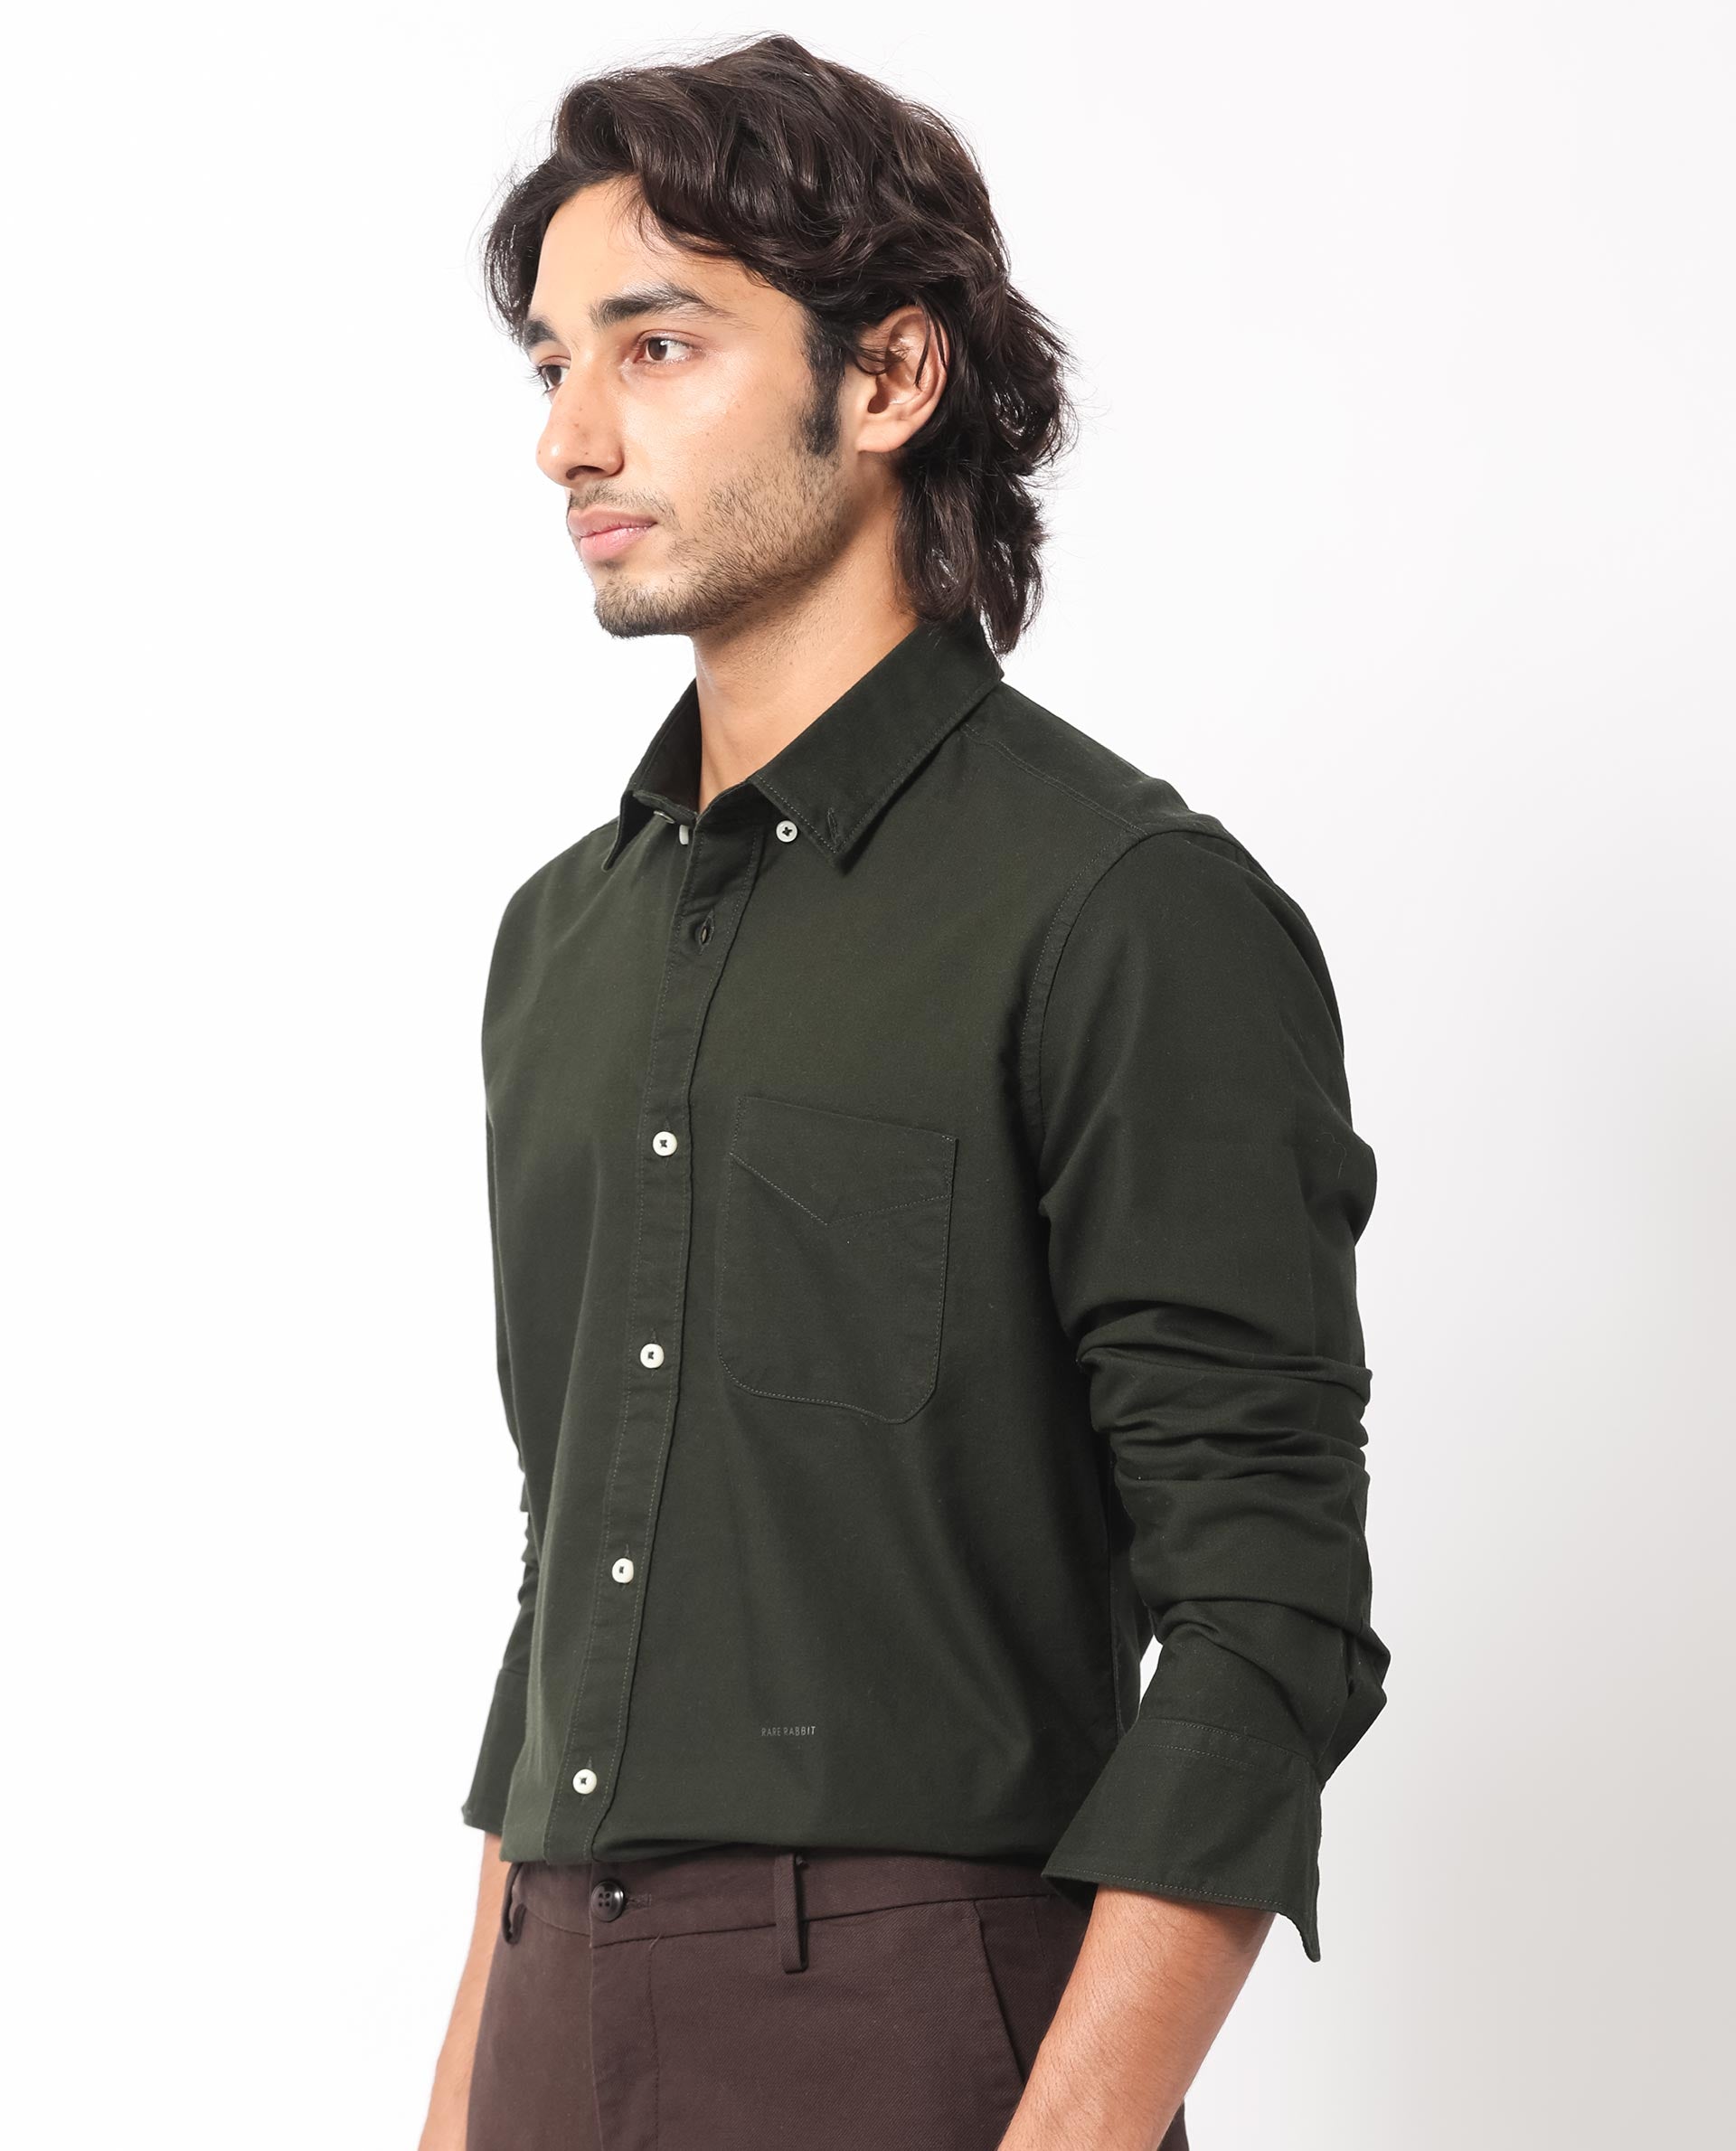 Dark colour Shirt and pants color combinations, men | Shirt outfit men,  Olive green shirt outfit, Black pants men